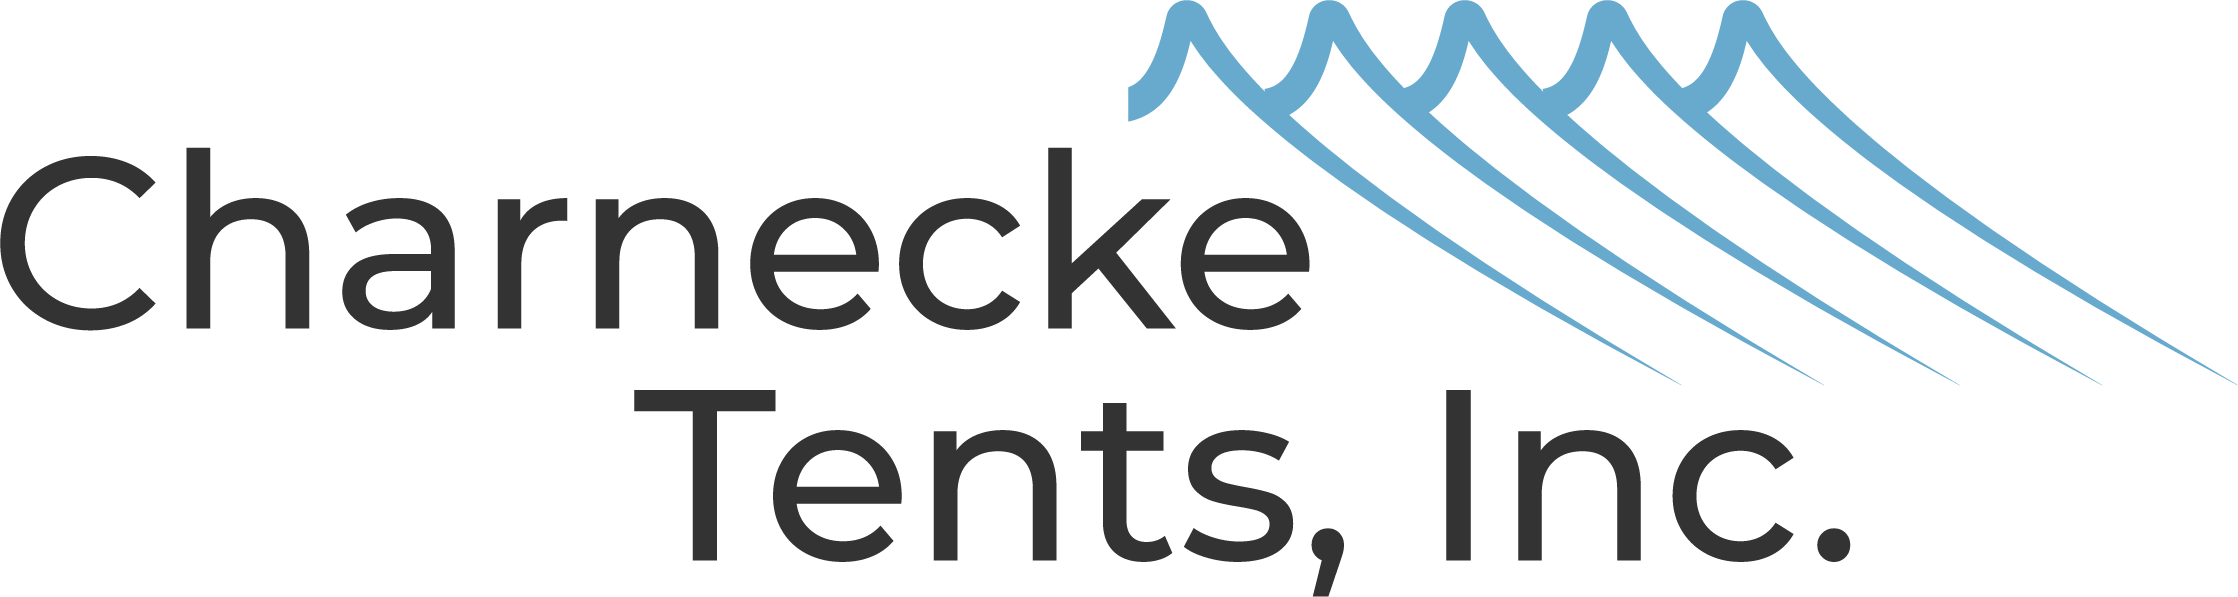 Charnecke Tents, Inc. & CCC Washers, Inc.